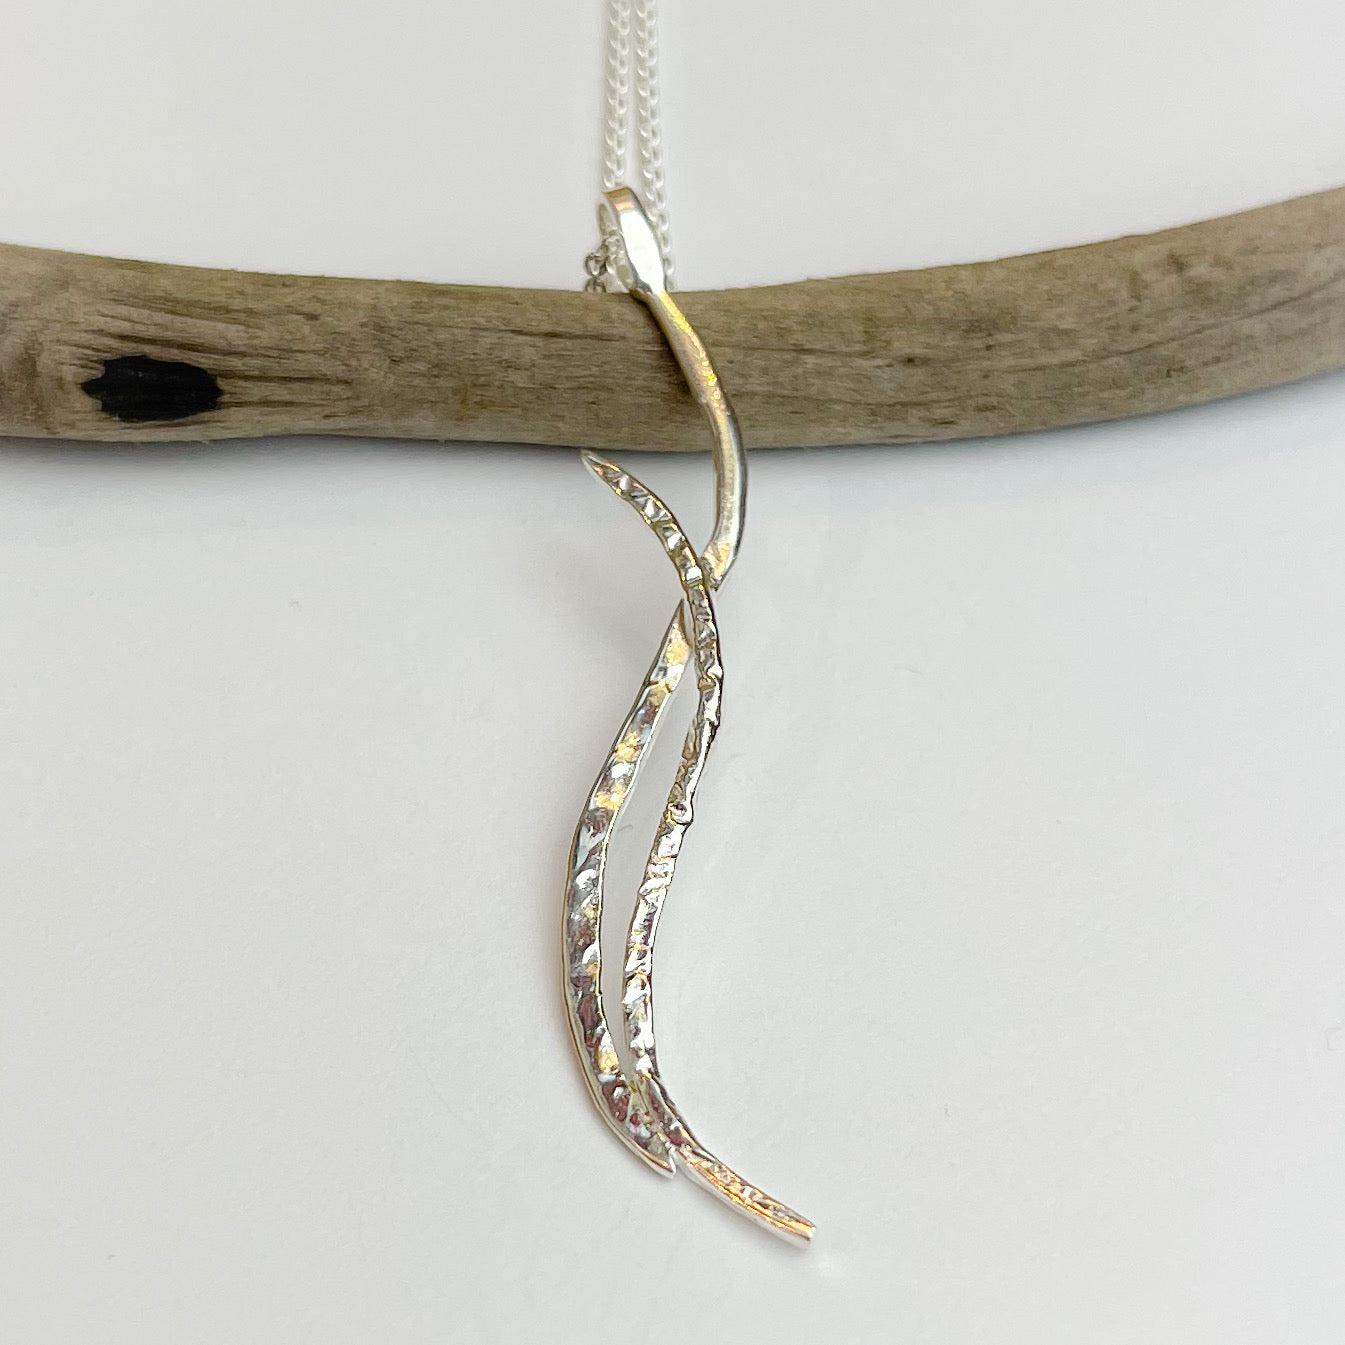 Silver Wave Pendant - The Nancy Smillie Shop - Art, Jewellery & Designer Gifts Glasgow